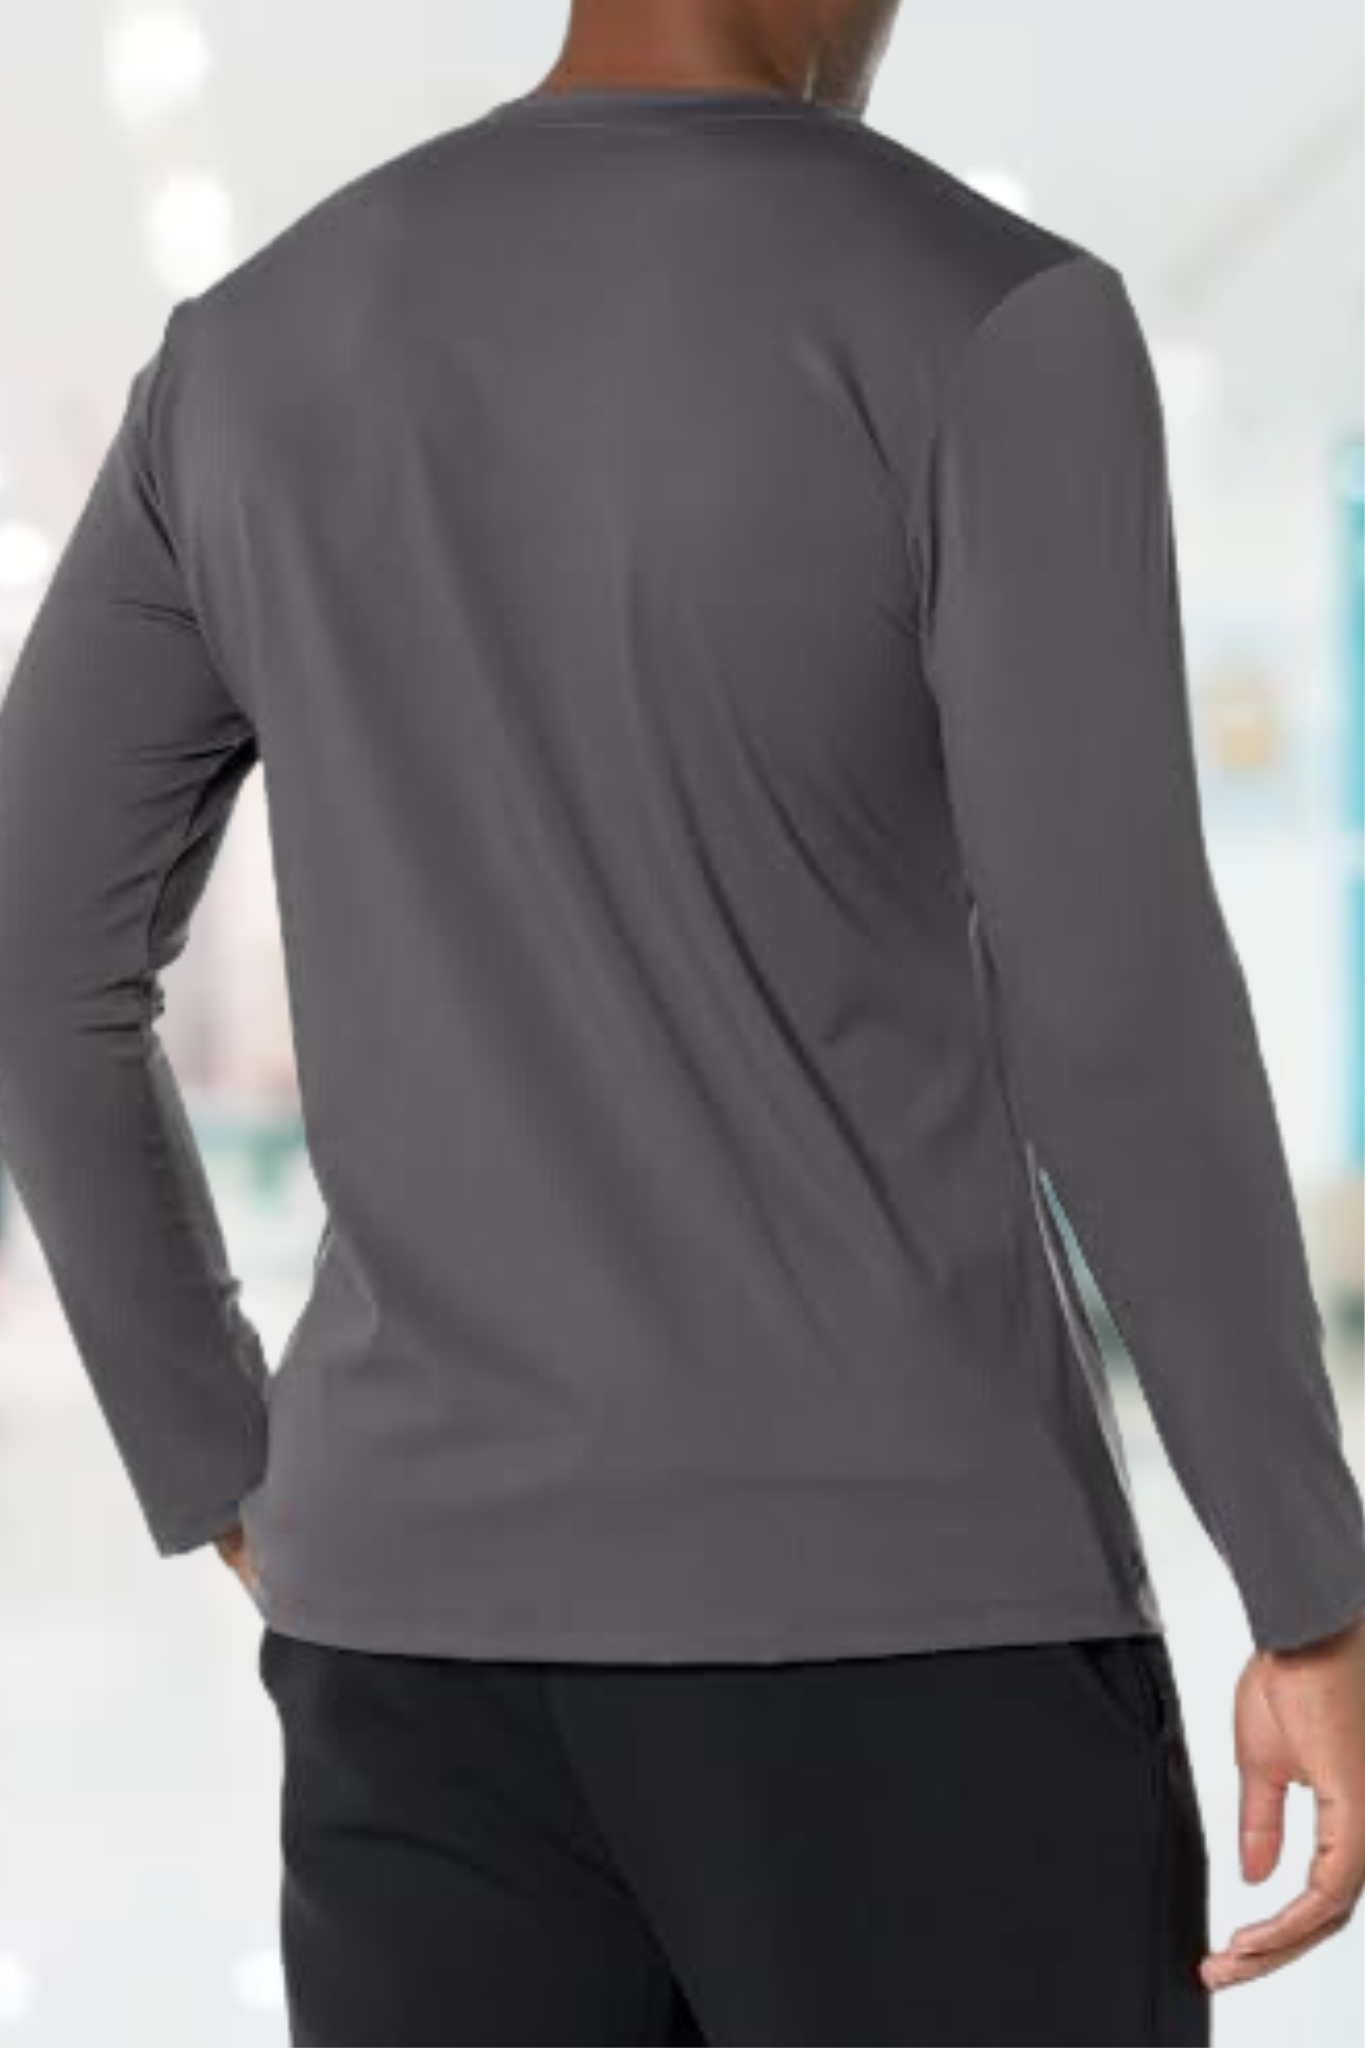 Scrubmates Long Sleeve Under Scrub V-Neck Tee Shirt for Men with Zippered Chest Pocket